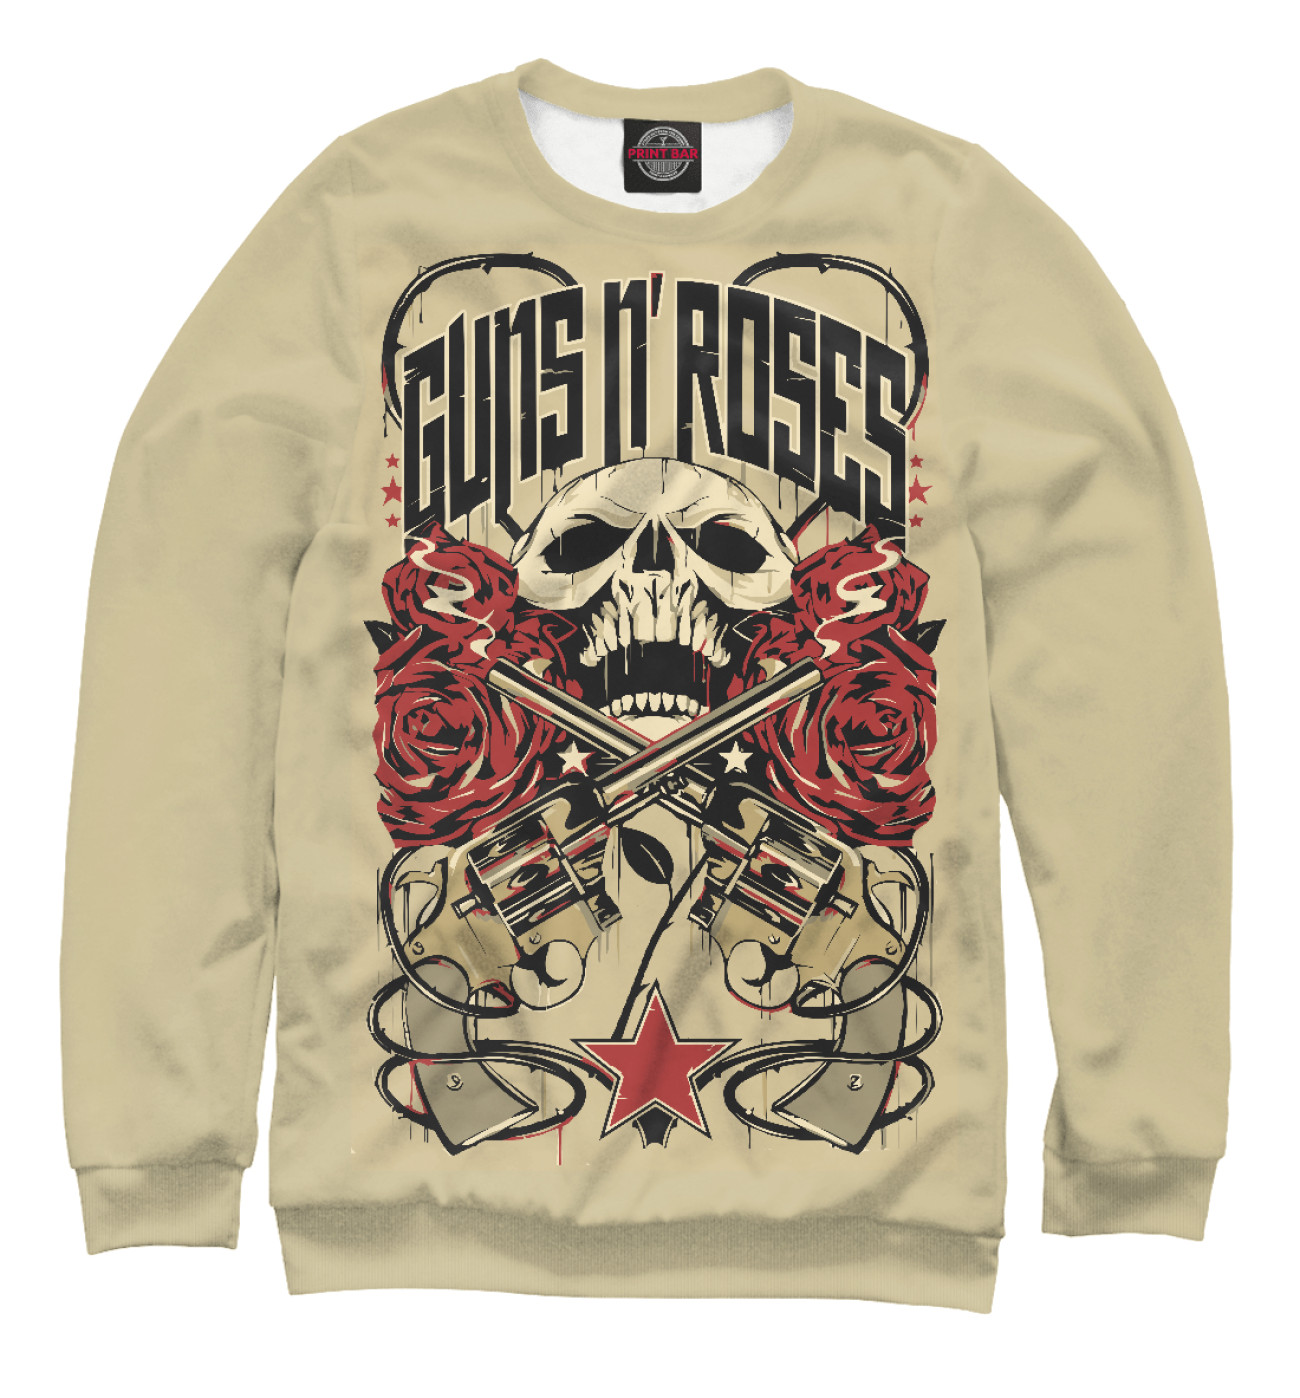 Мужской Свитшот Guns N’ Roses, артикул: GNR-837878-swi-2